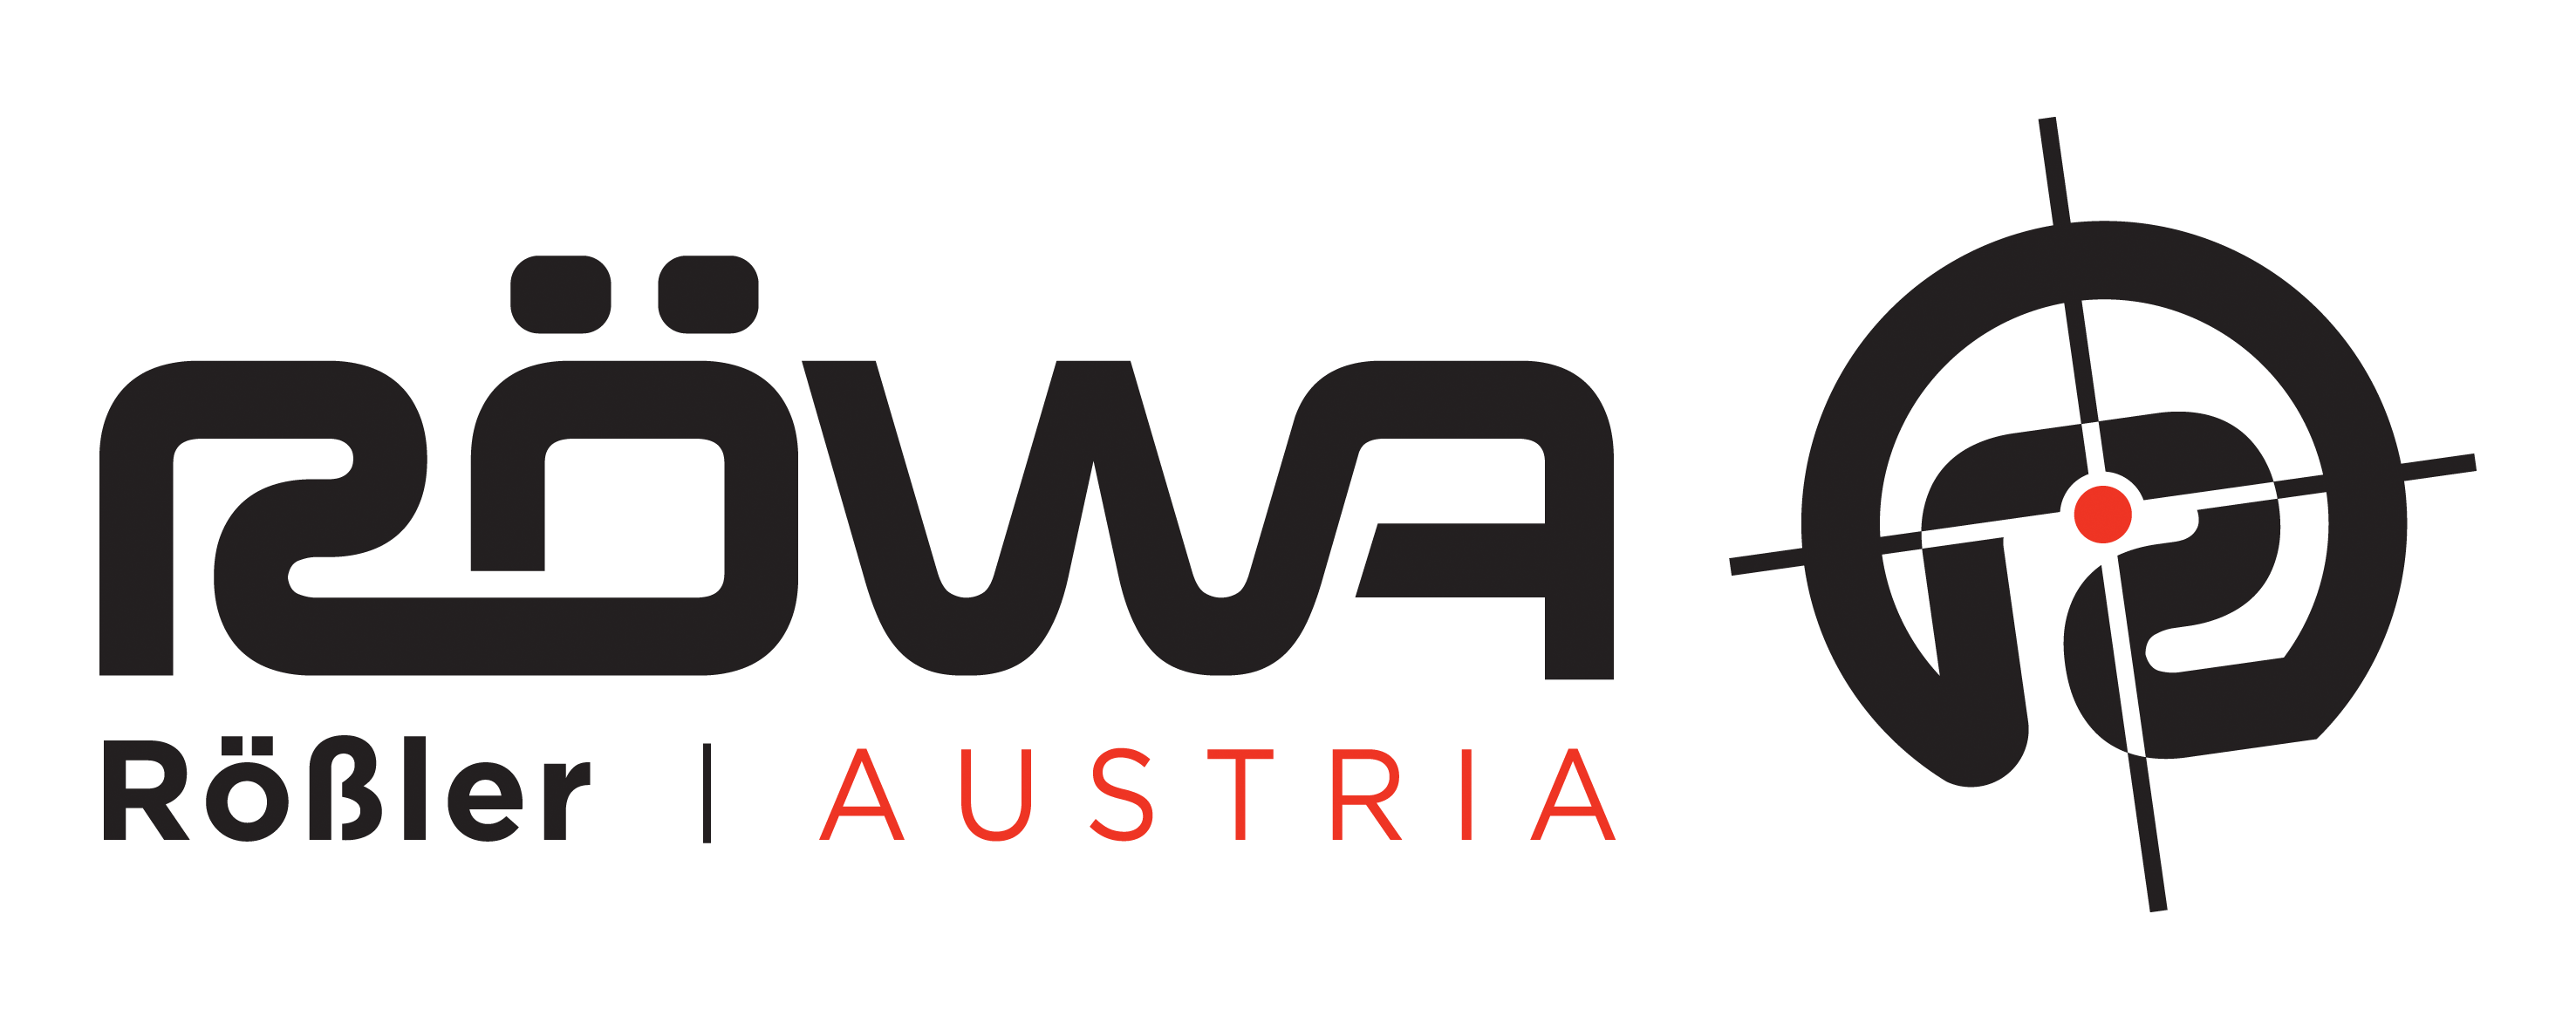 Våpen - Röwa Rößler Austria